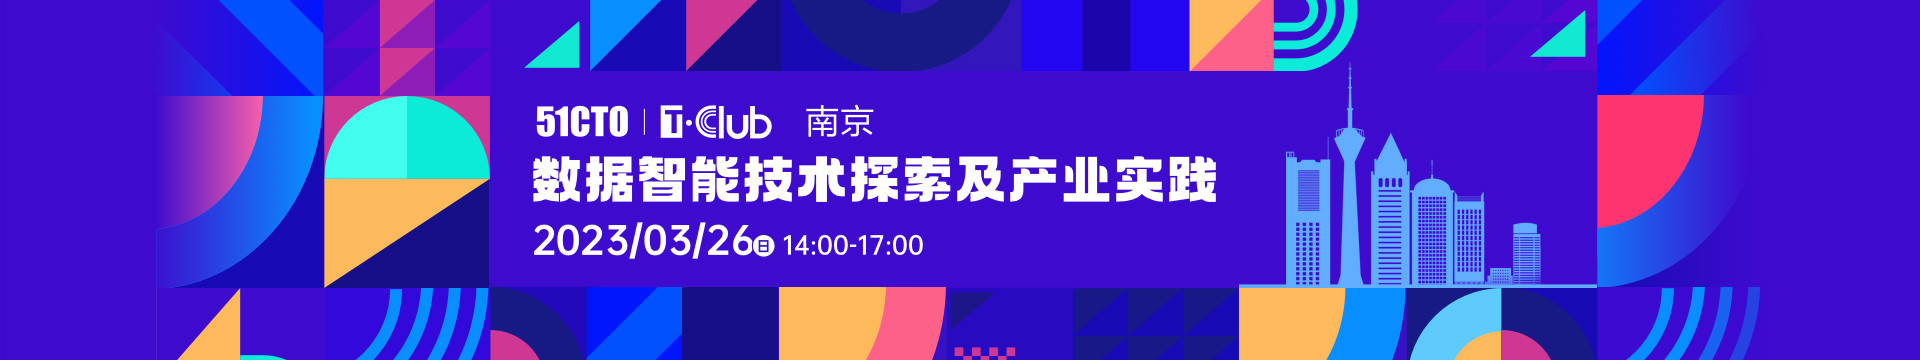 T·Club技术开放日：南京站|数据智能技术探索及产业实践